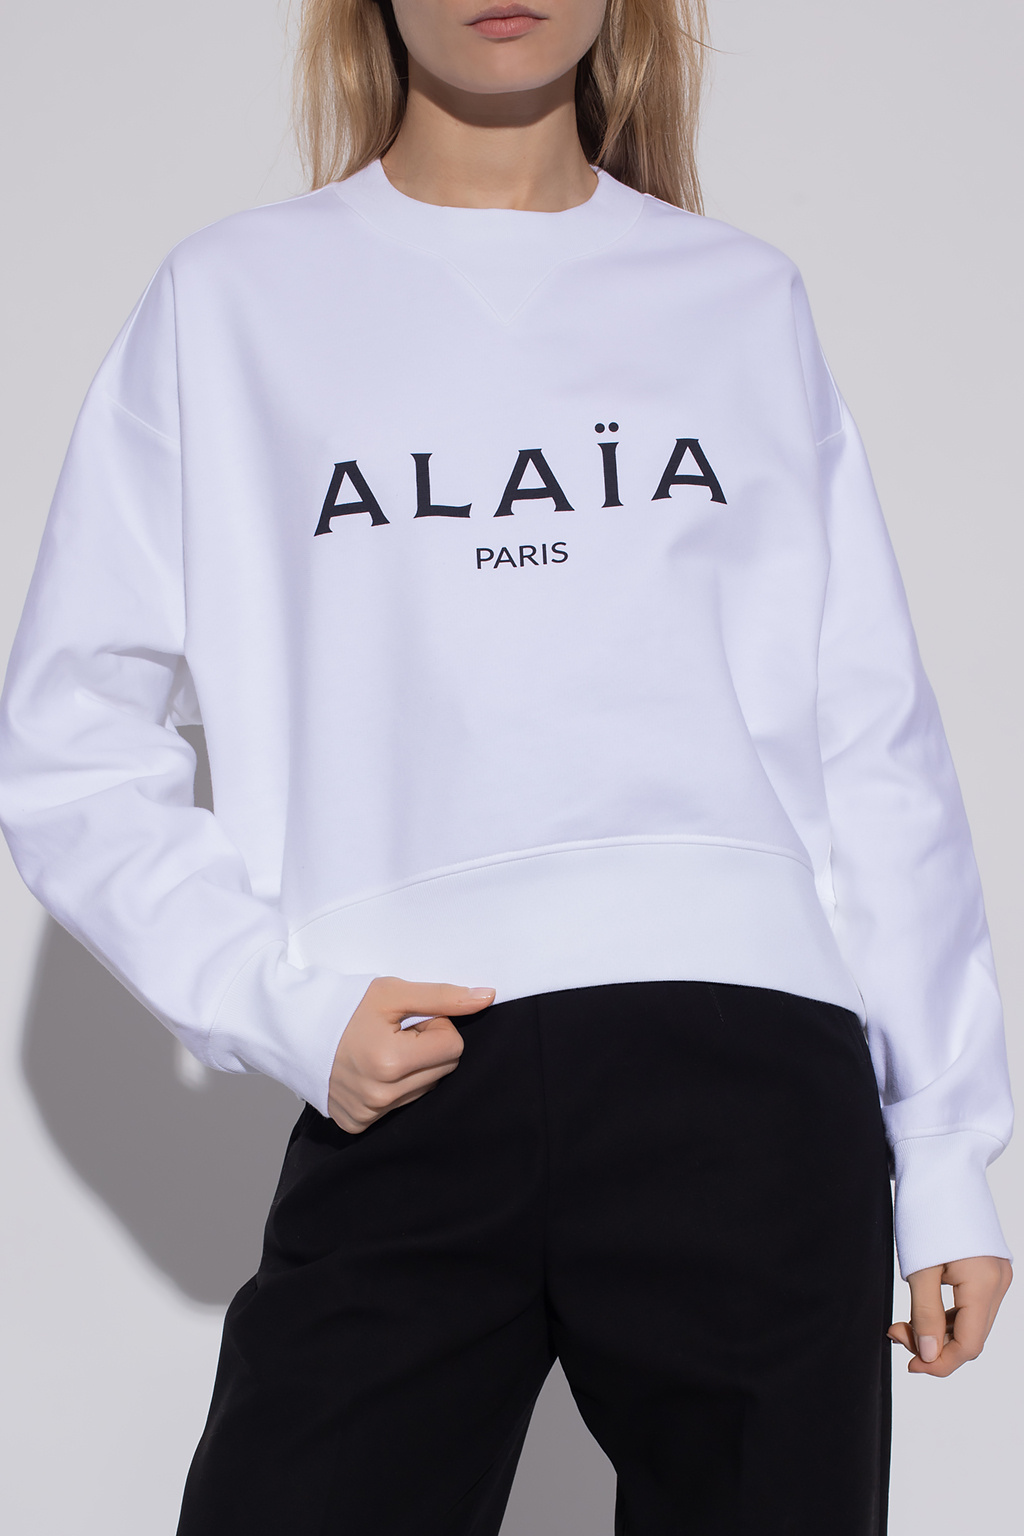 Alaia Lunar Year Of The Tiger T-shirt 9713 BLACK